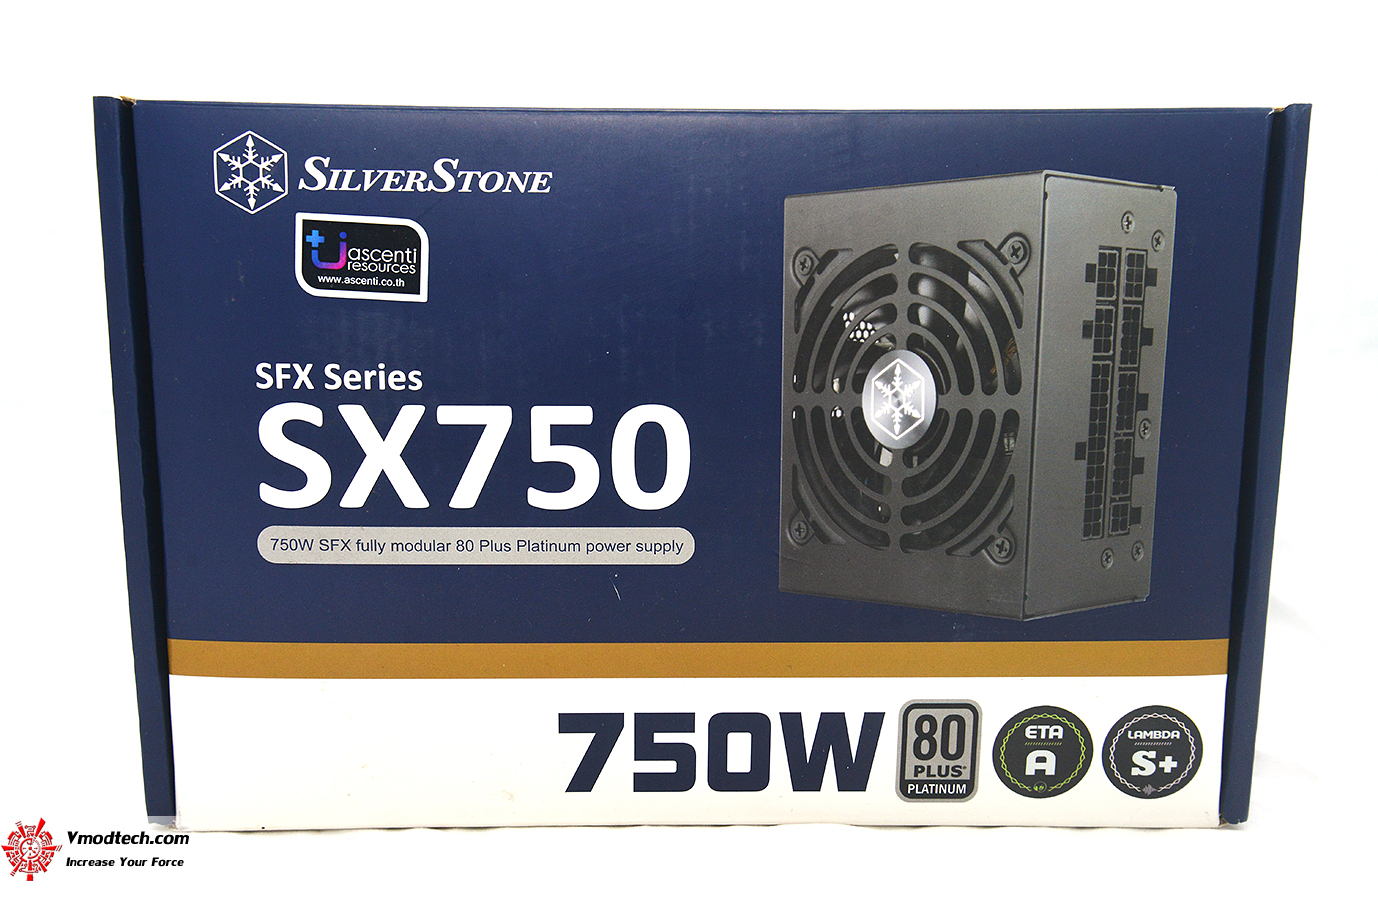 dsc 3108 SilverStone SX750 Platinum Review